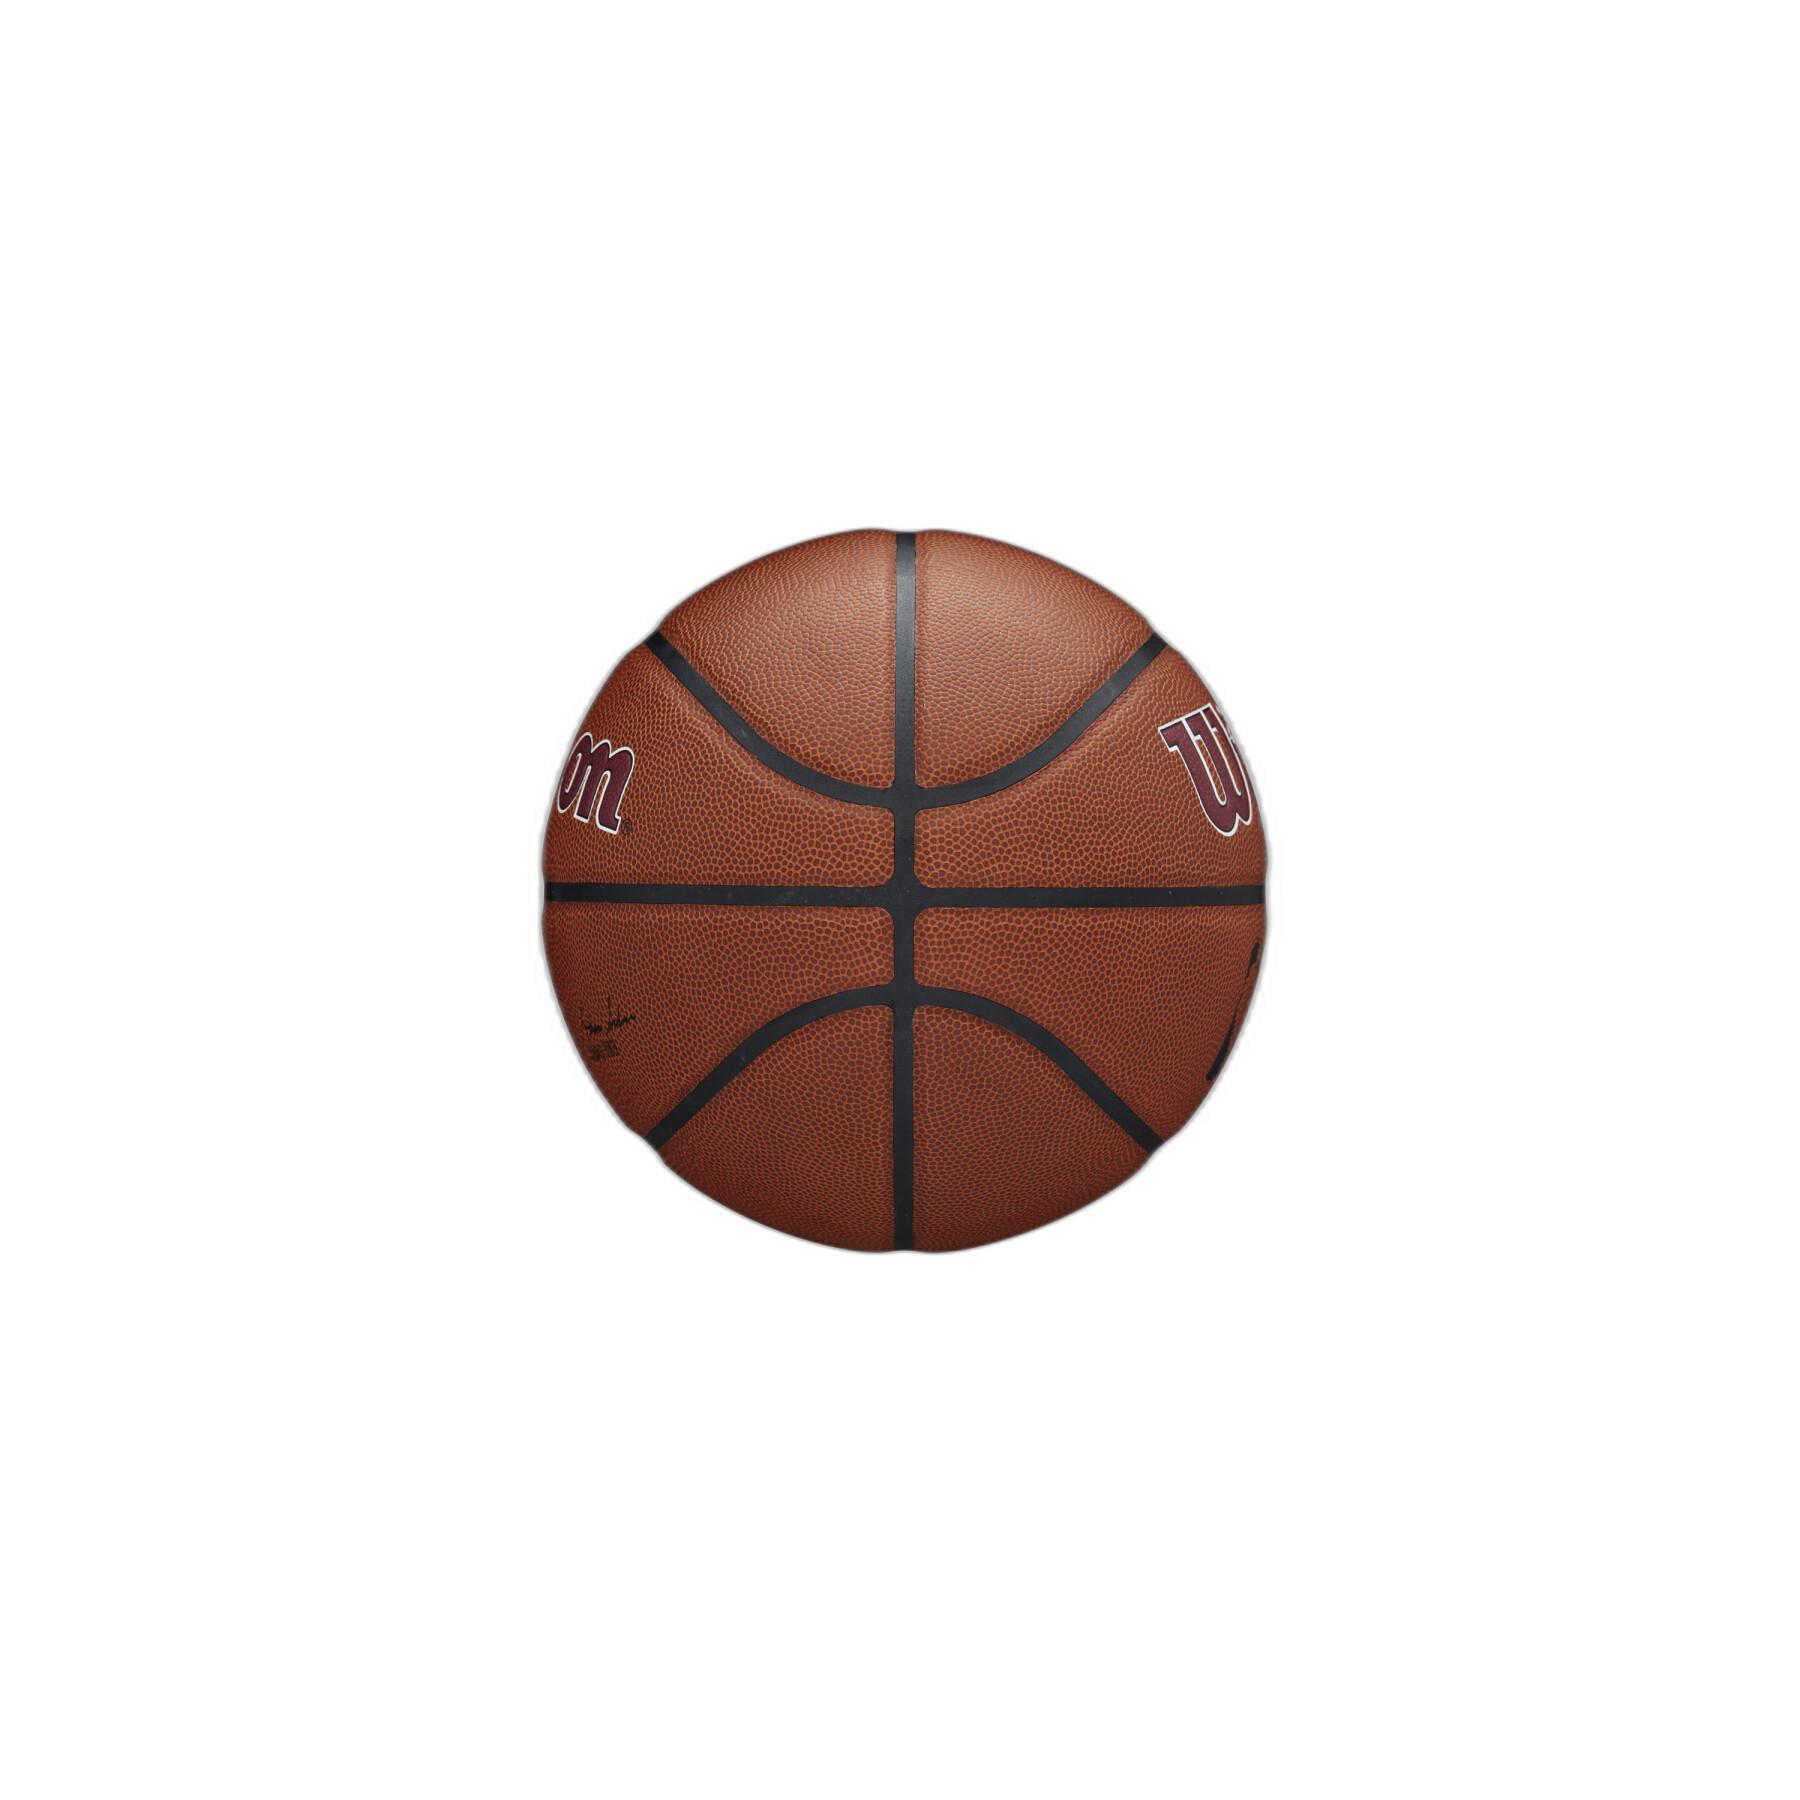 Basketball Cleveland Cavaliers NBA Team Alliance